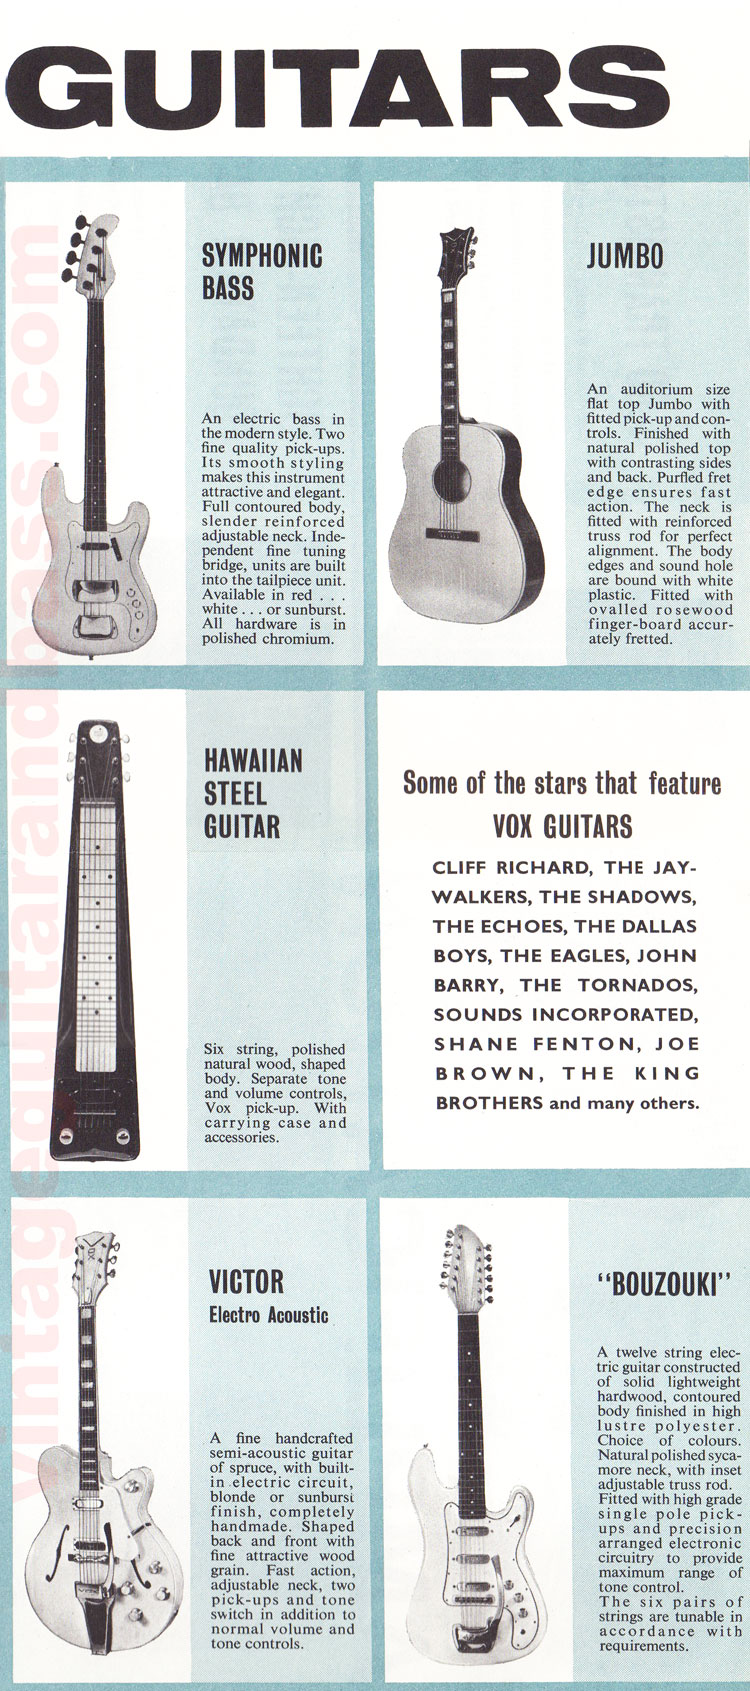 1962 Vox guitar catalog page 4 - details of the Vox Escort, Soundcaster, Ace, Symphonic bass and Bassmaster